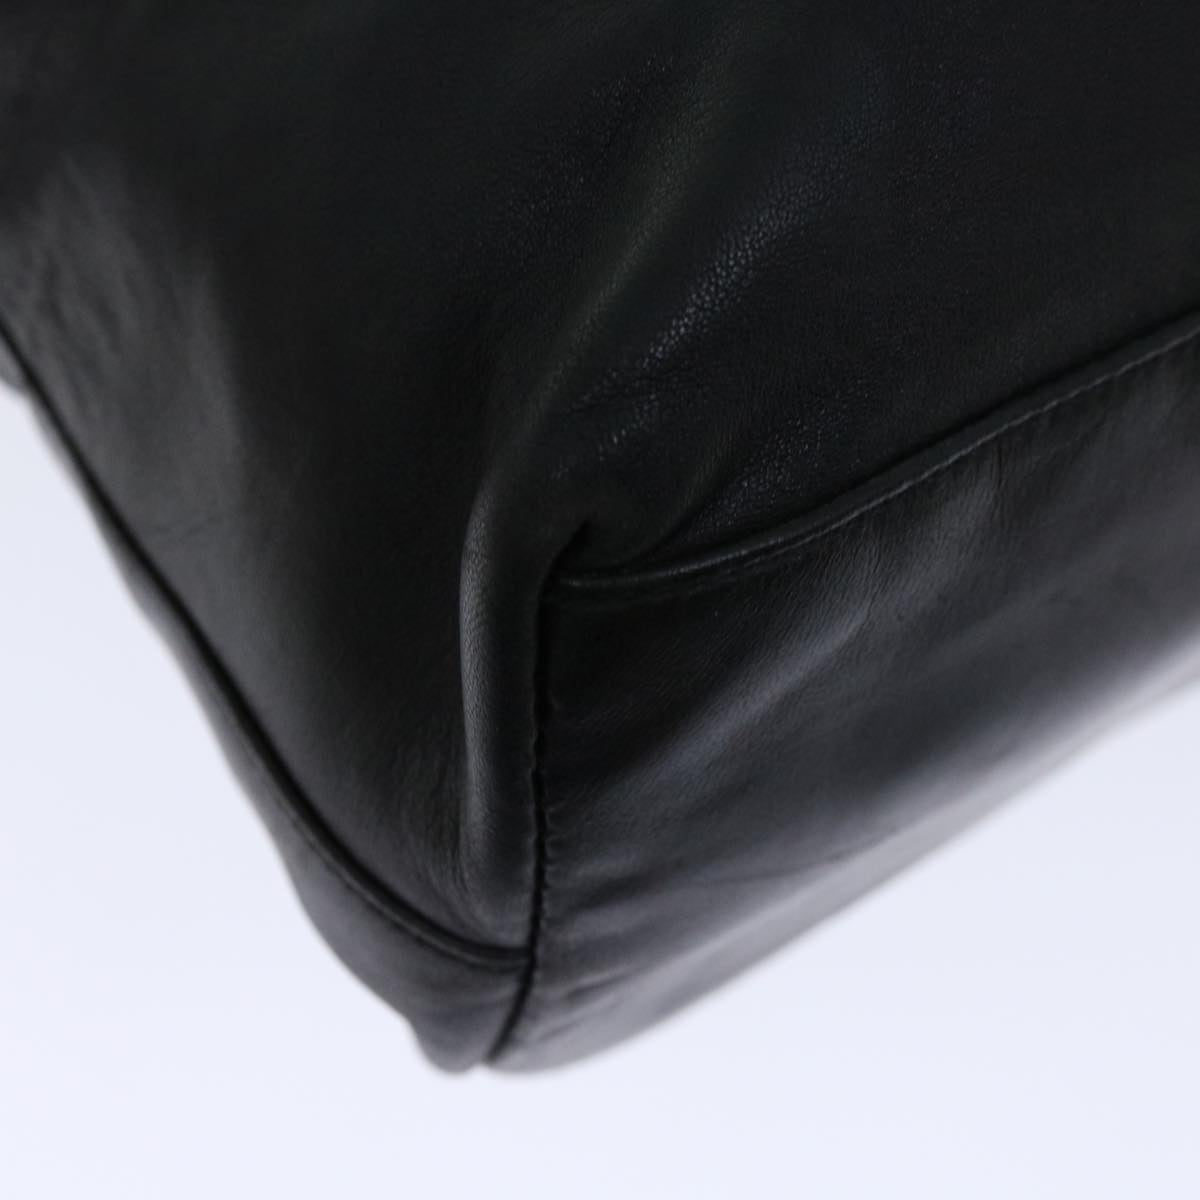 PRADA Tote Bag Leather Black Auth ep3624